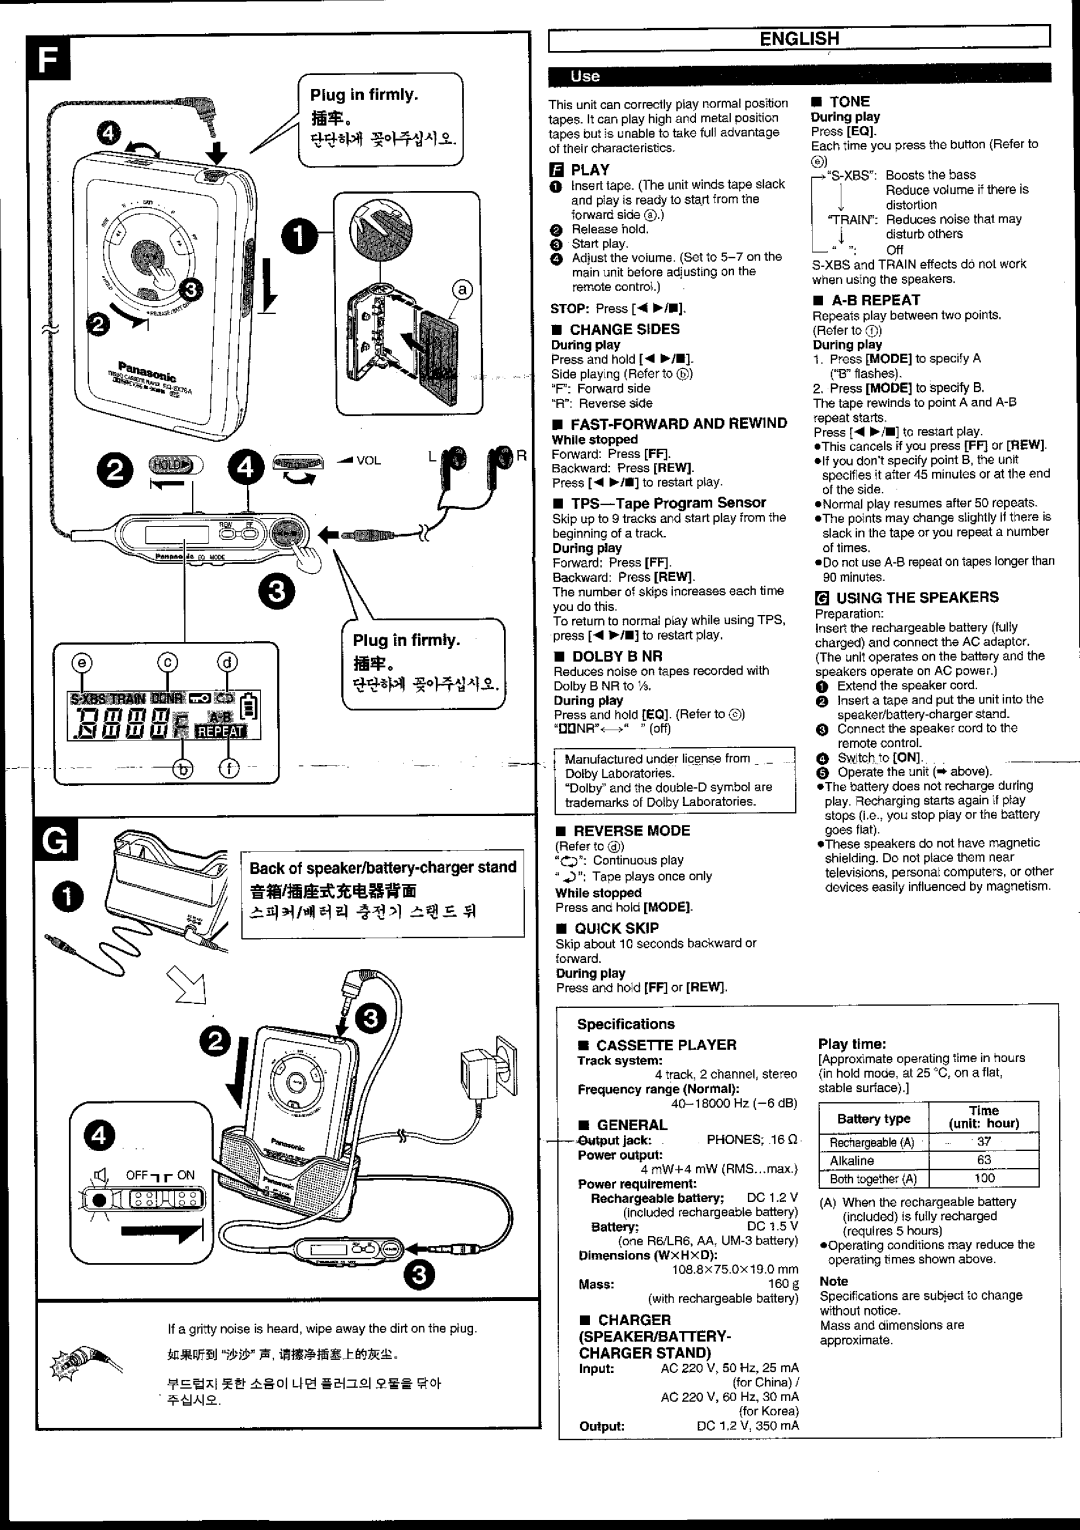 Panasonic RQ-SX76A manual 